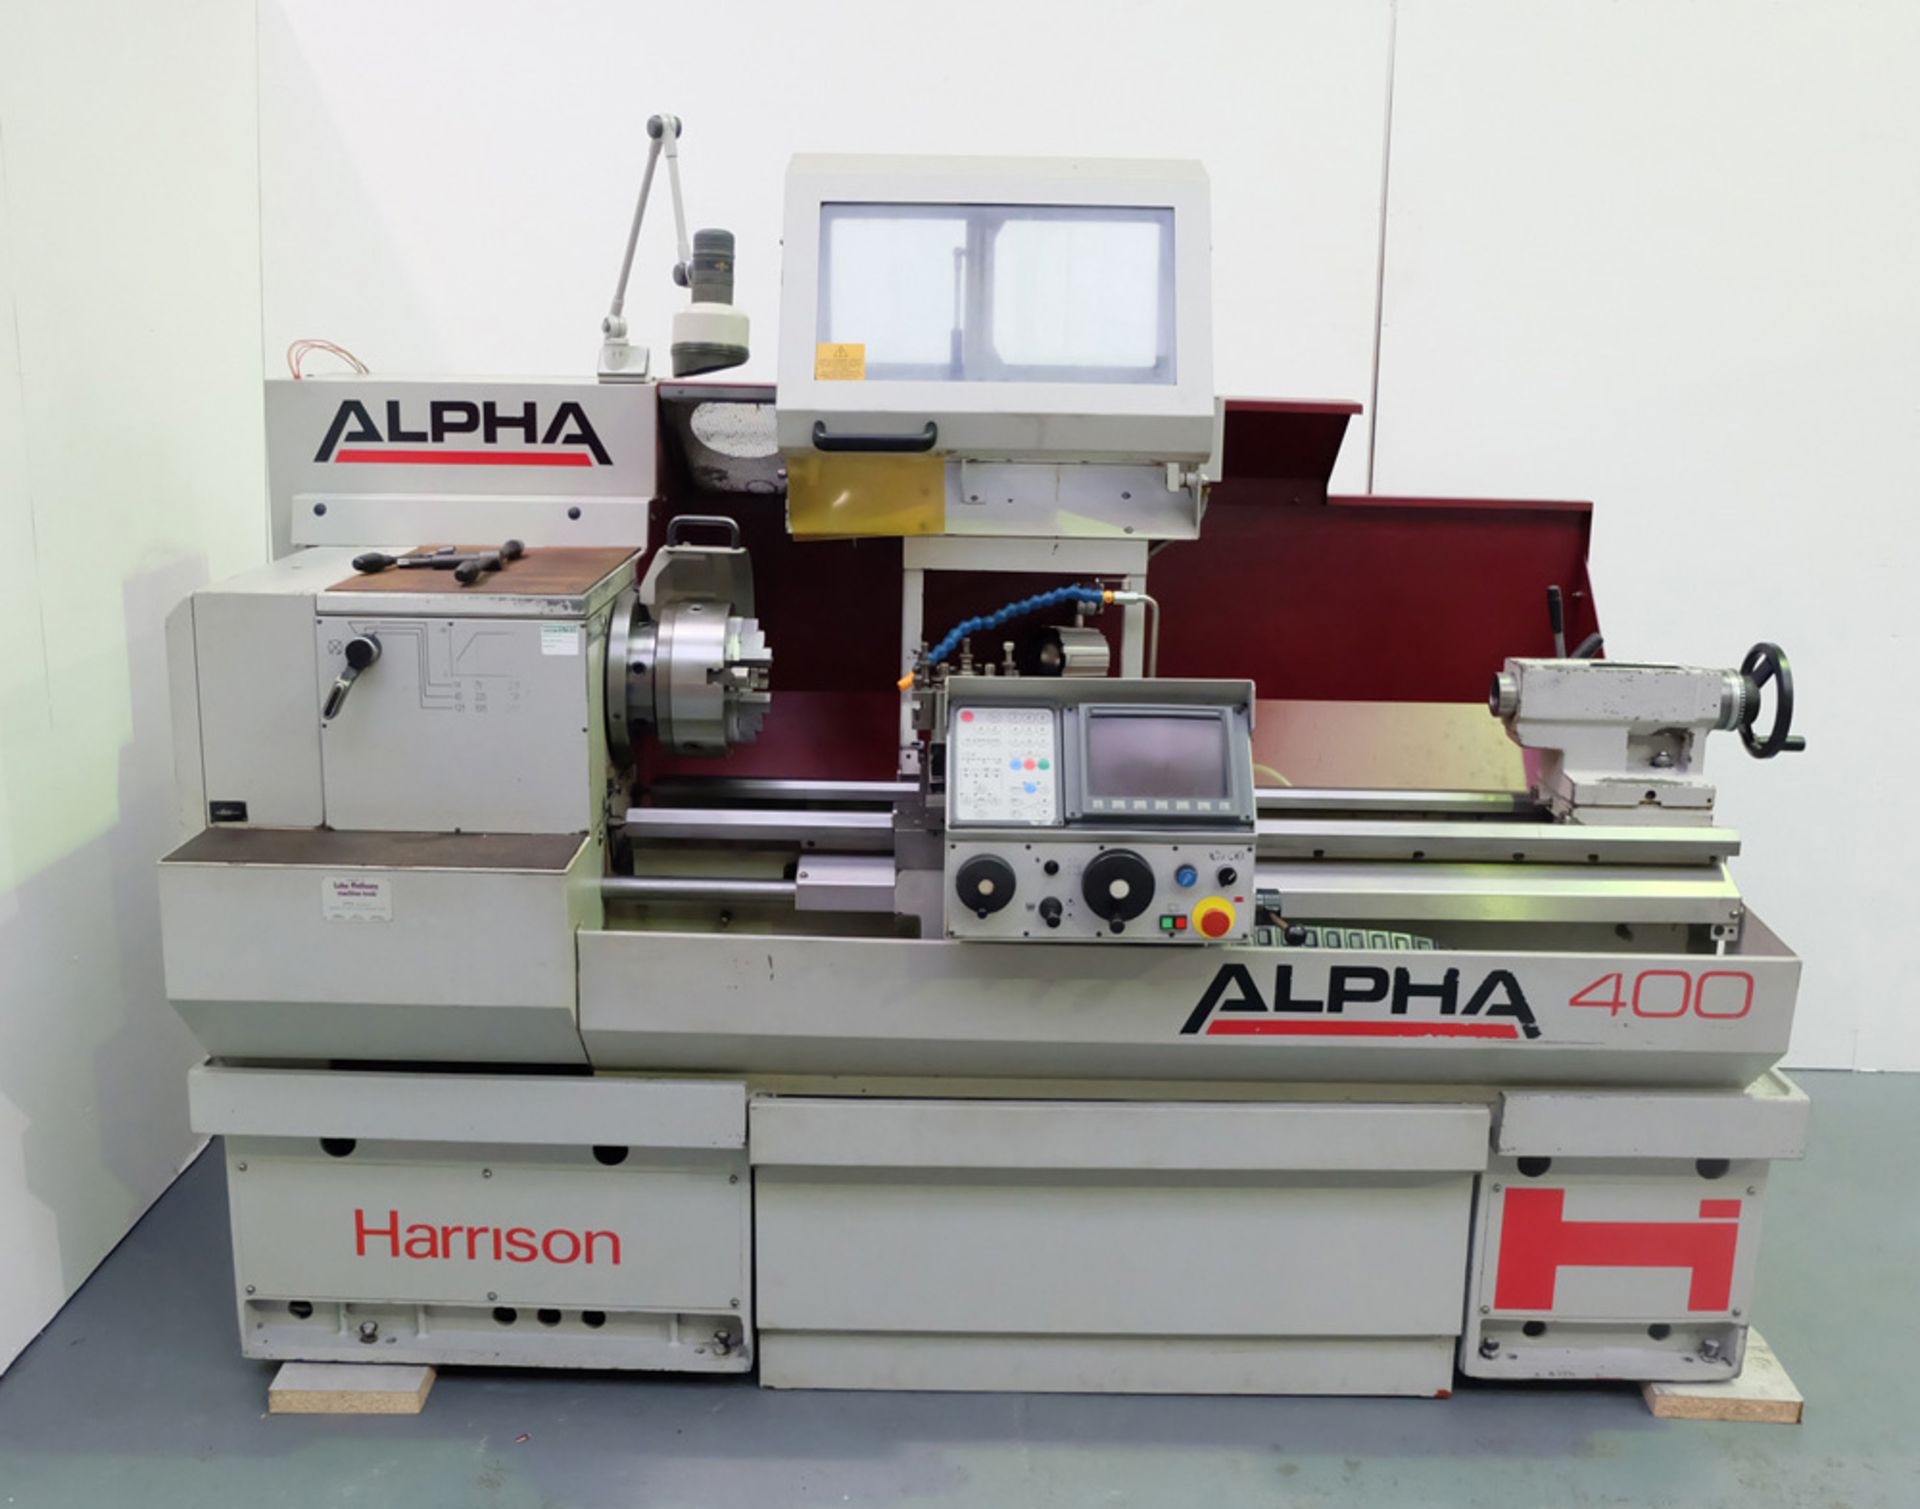 Harrison Alpha 400 CNC Teach Lathe with G.E. Fanuc Control.